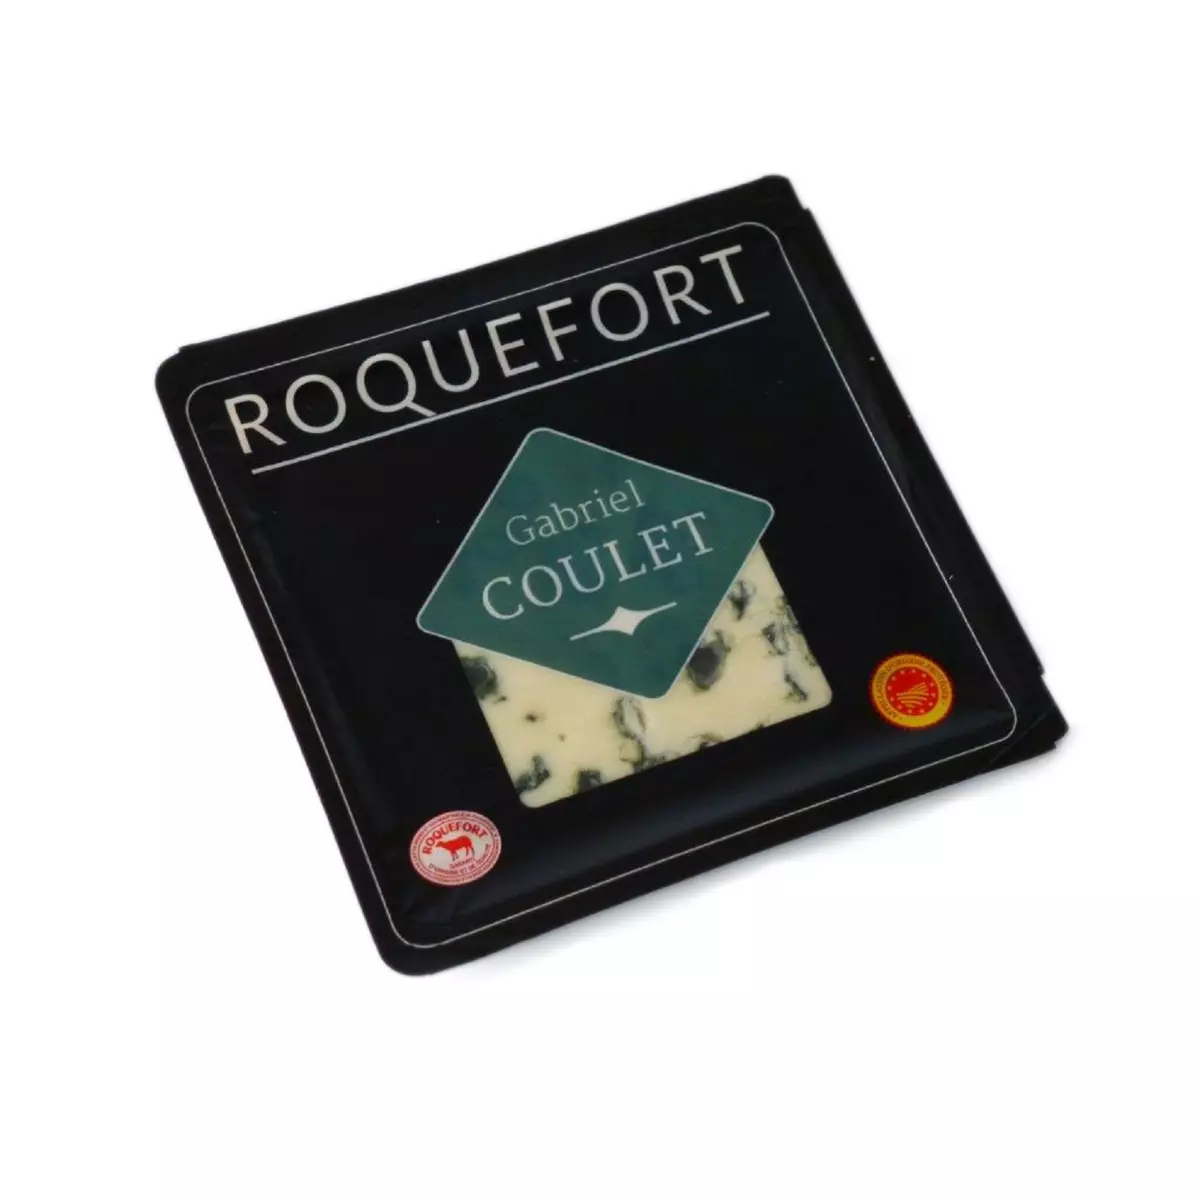 GABRIEL COULET Roquefort 100g